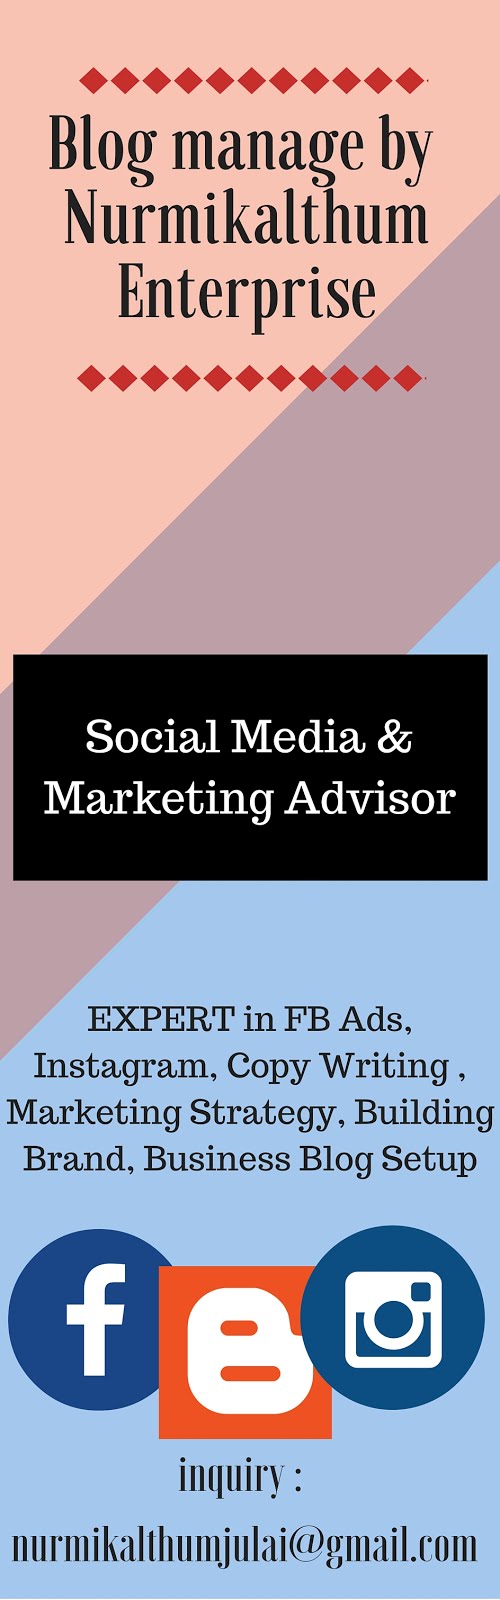 I am a Social Media & Marketing Advisor